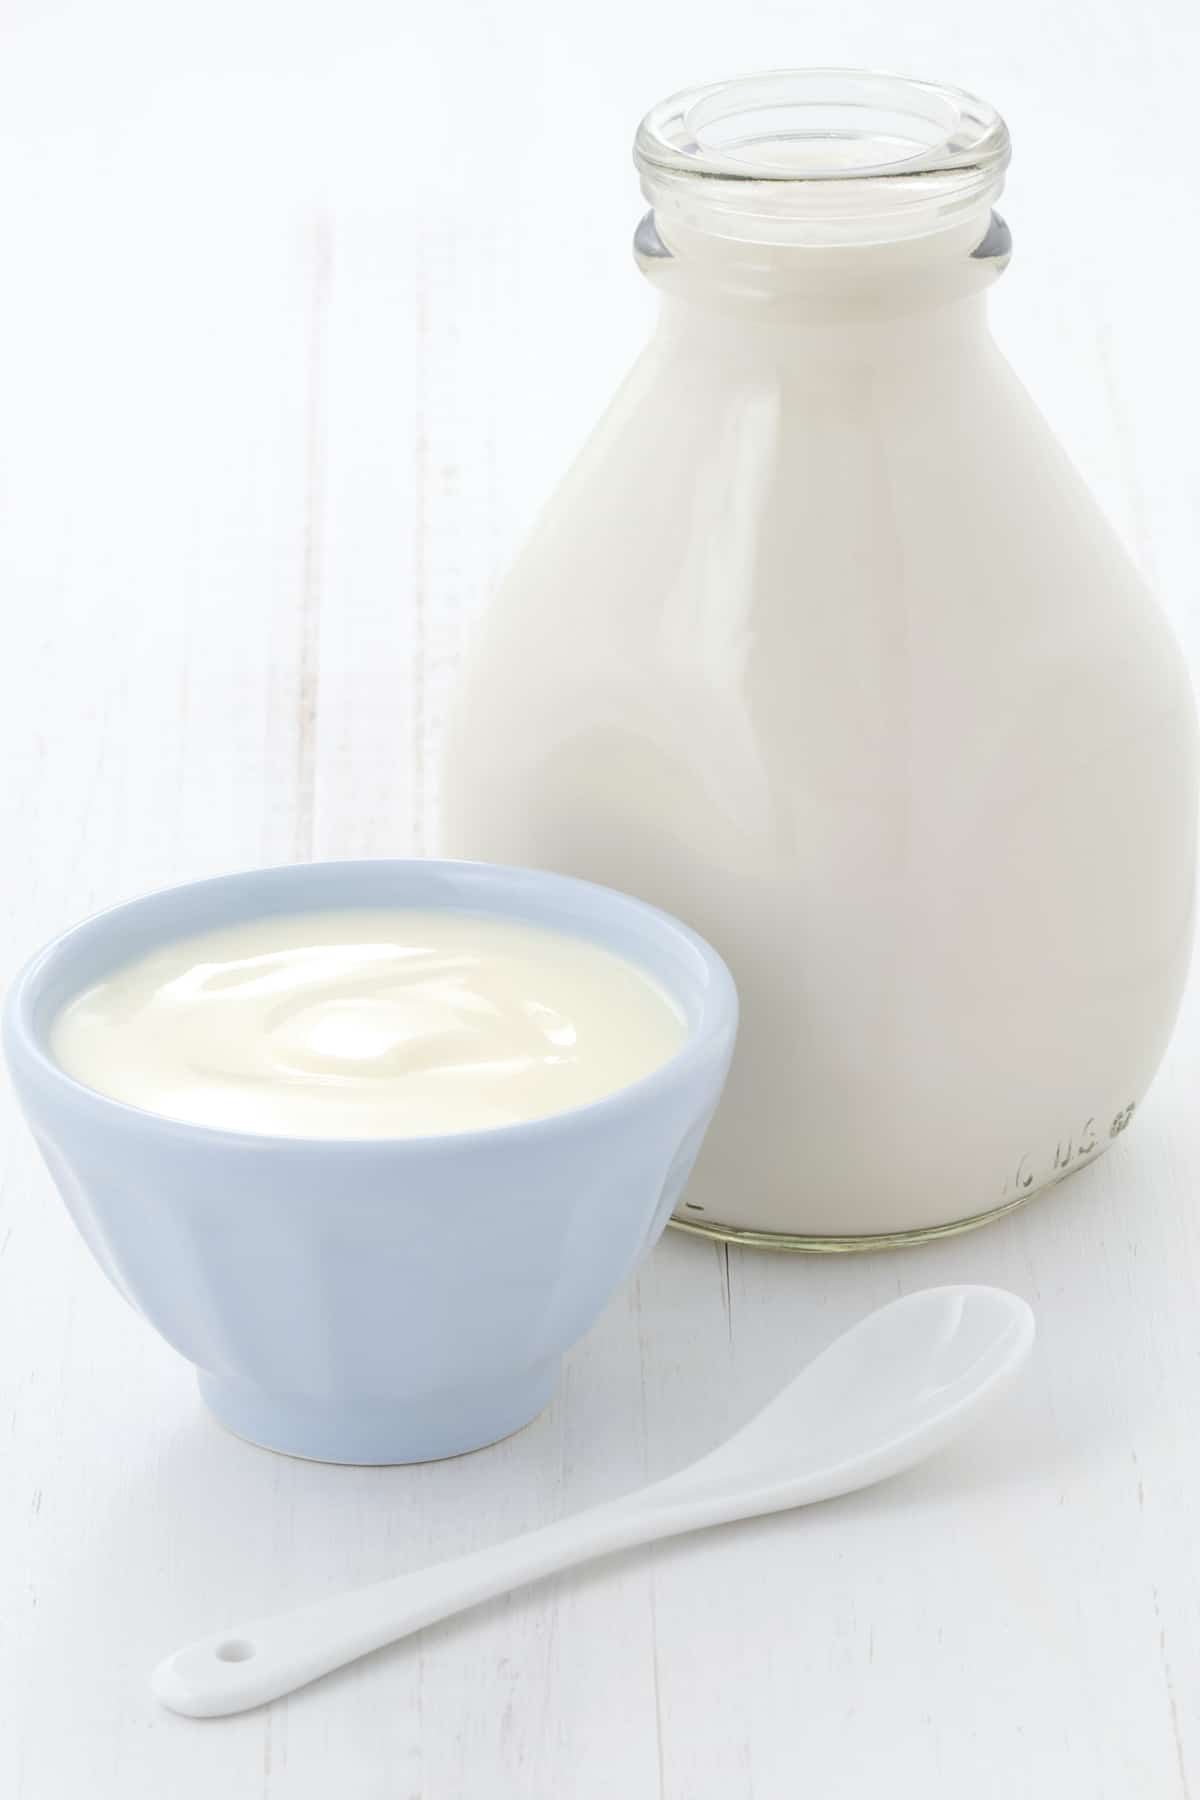 A glass bottle of milk next to a small dish of yogurt.